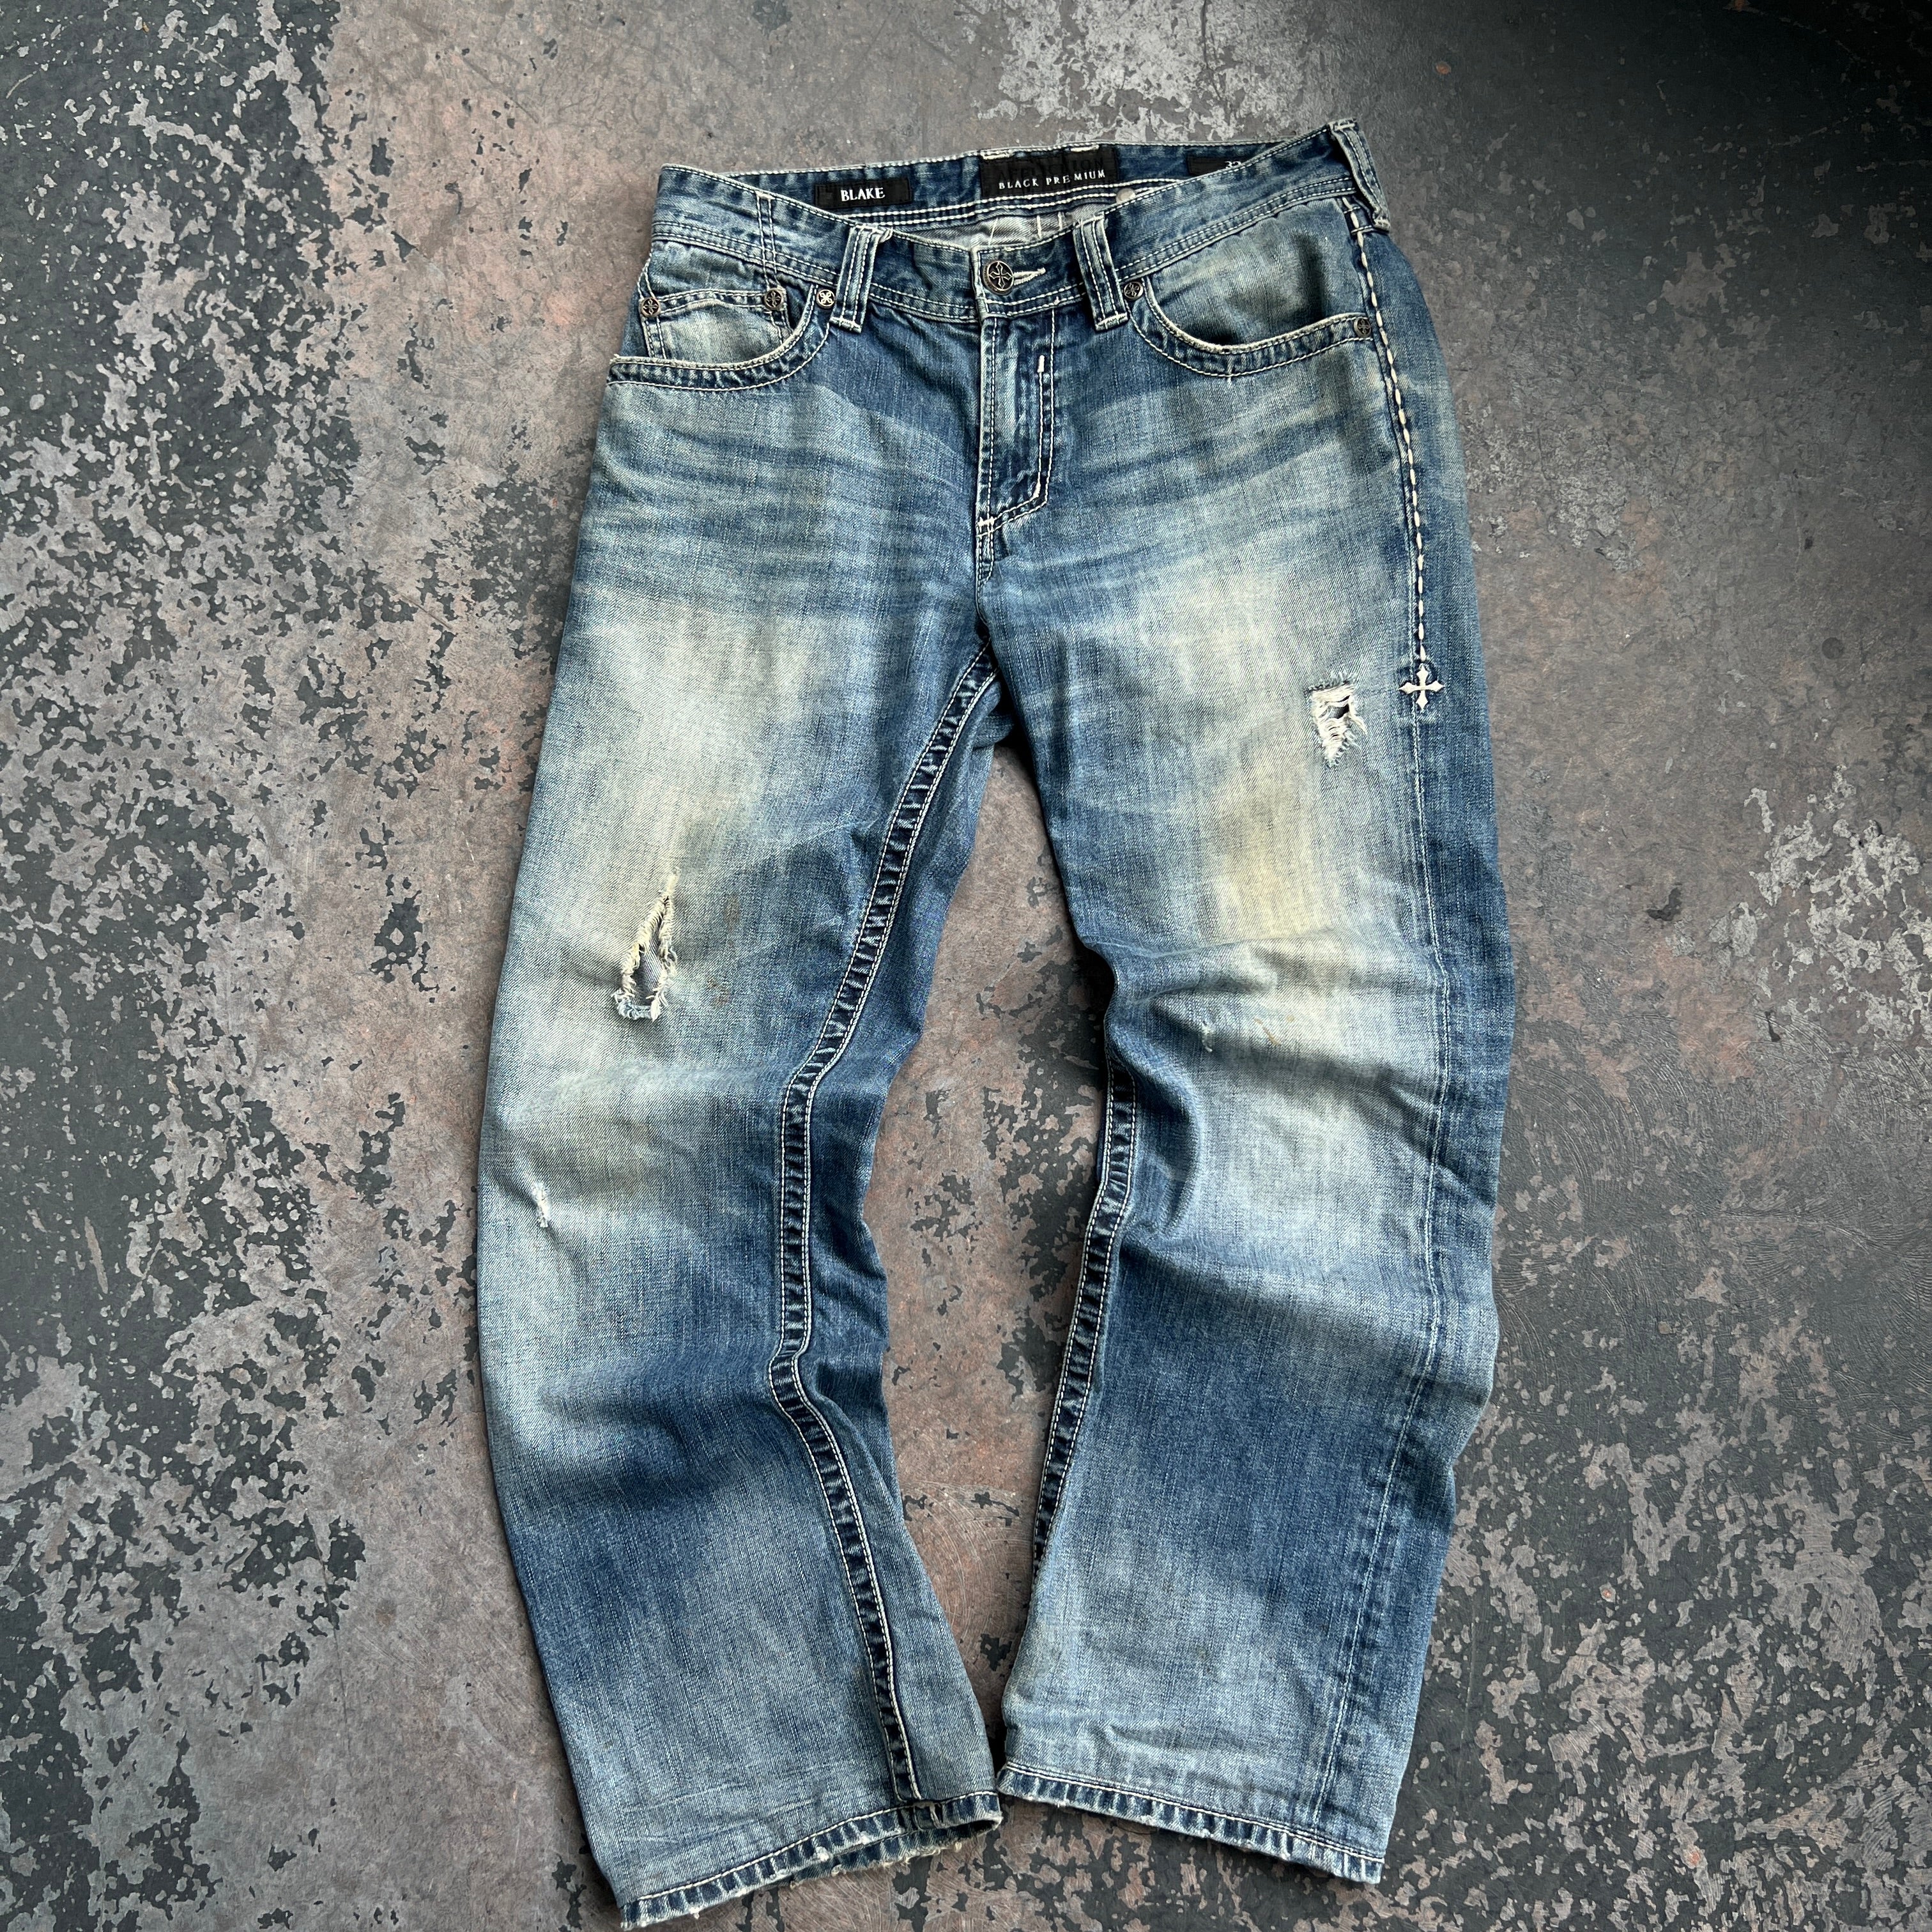 Affliction "Black Premium" Jeans